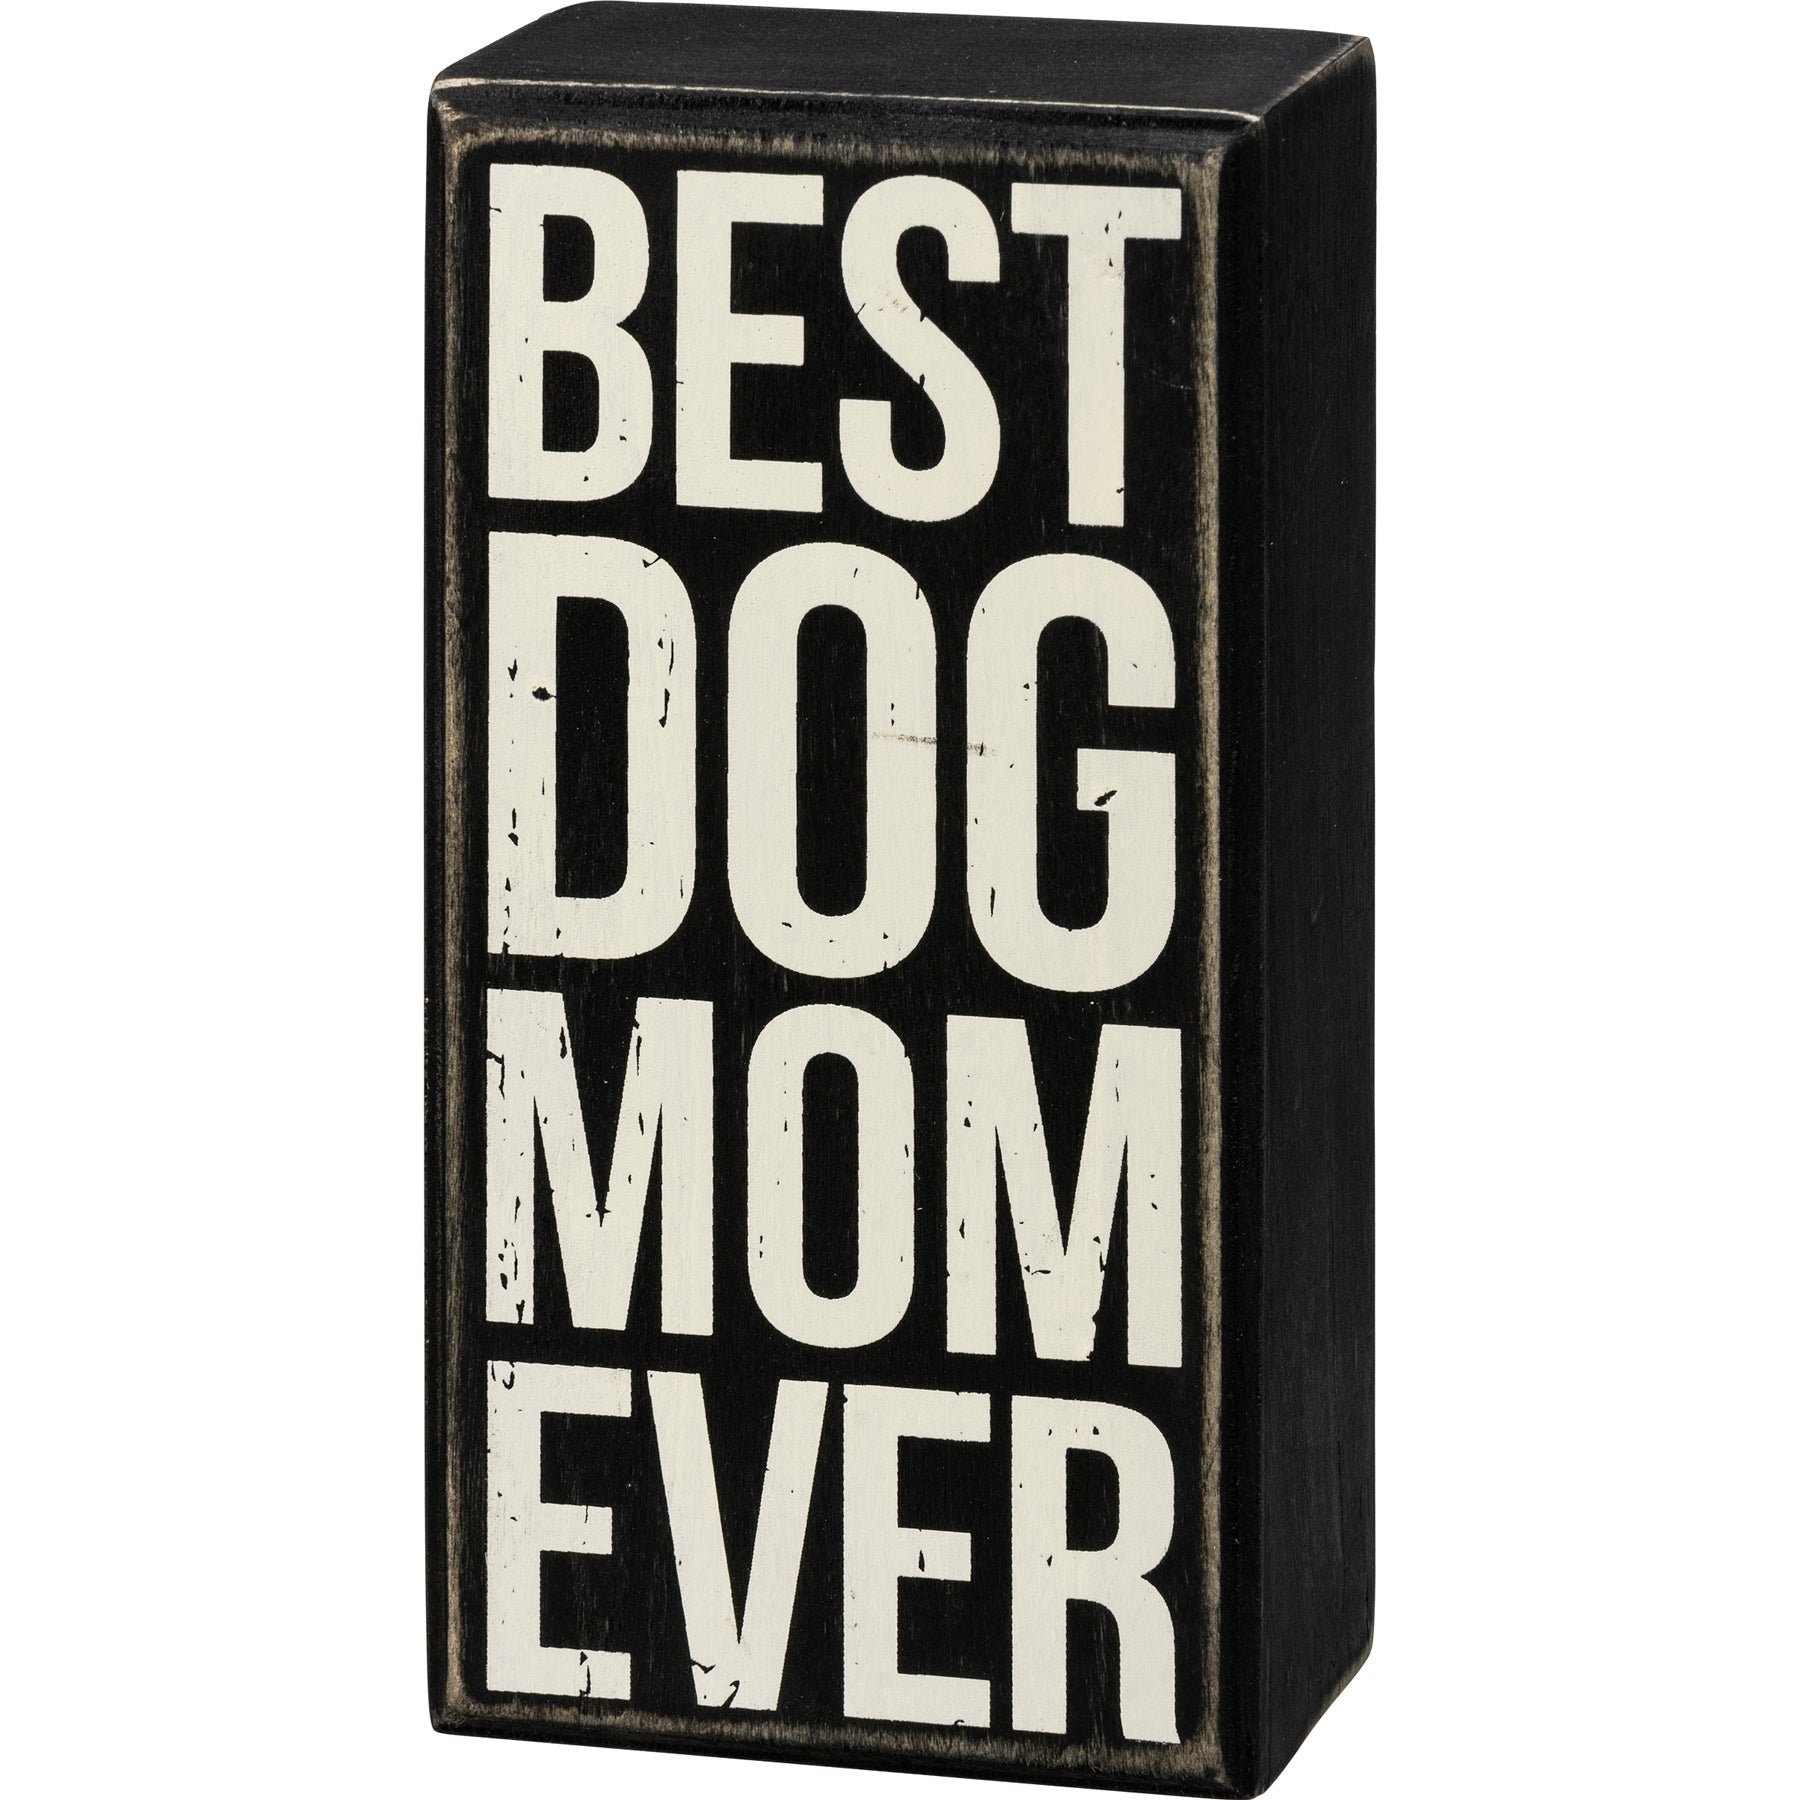 Best Dog Mom Ever Box Sign